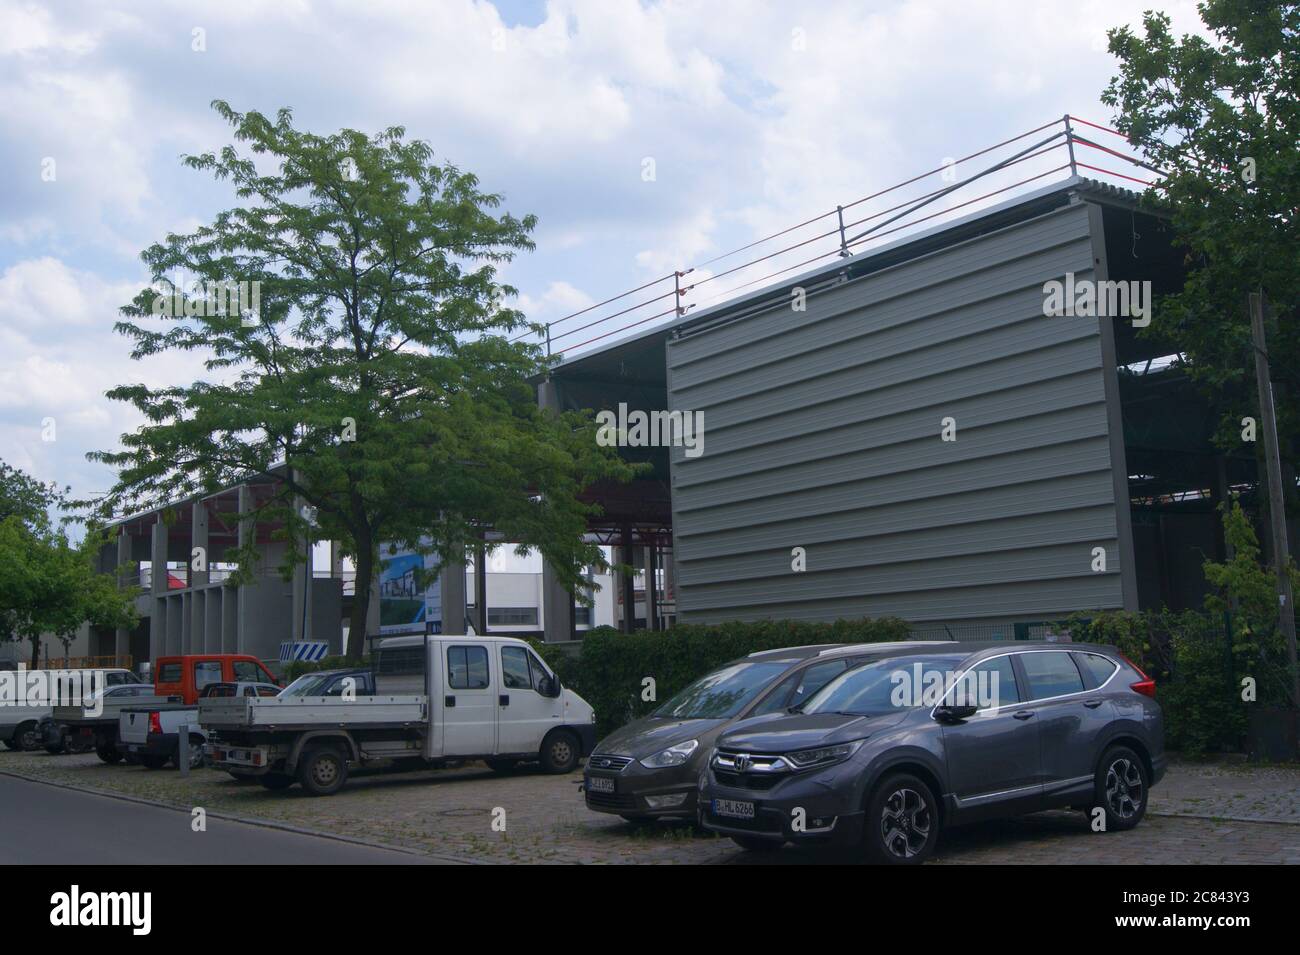 Entwicklung des Gewerbeparks City Dock dans der Altonaer Straße à Berlin-Spandau. Banque D'Images